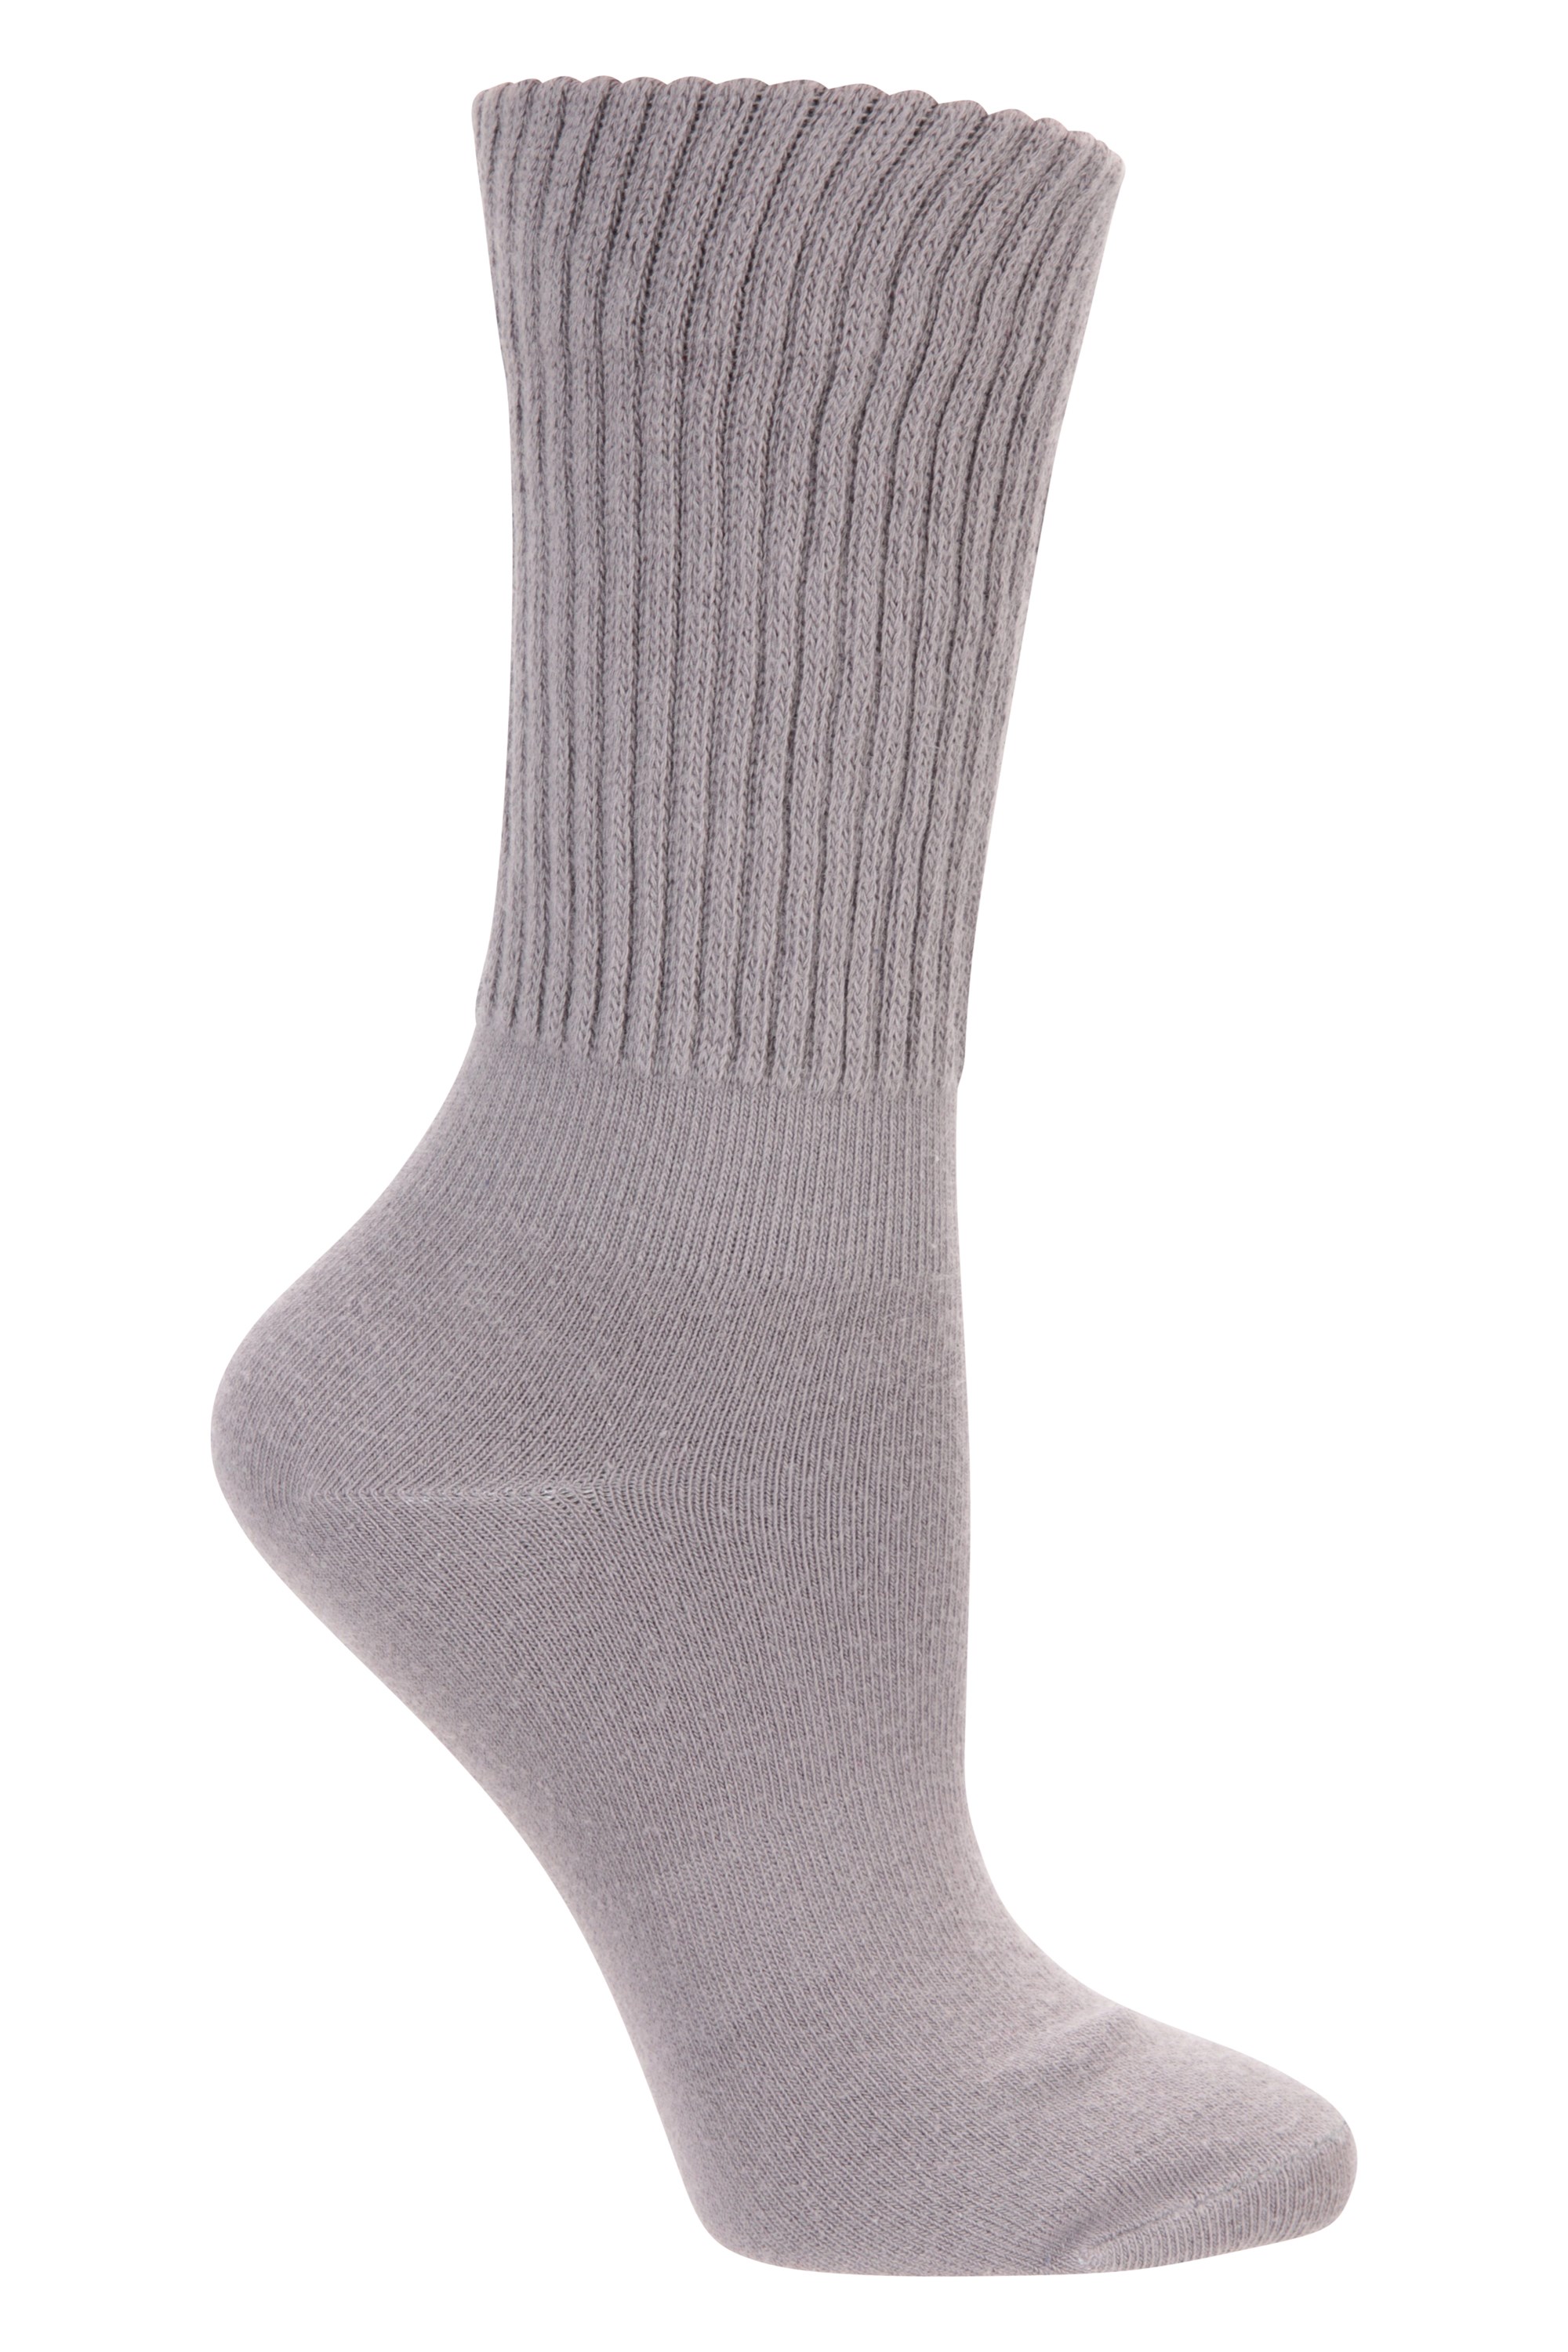 Lightweight Double-Layer Womens Anti-Chafe Socks - Grey